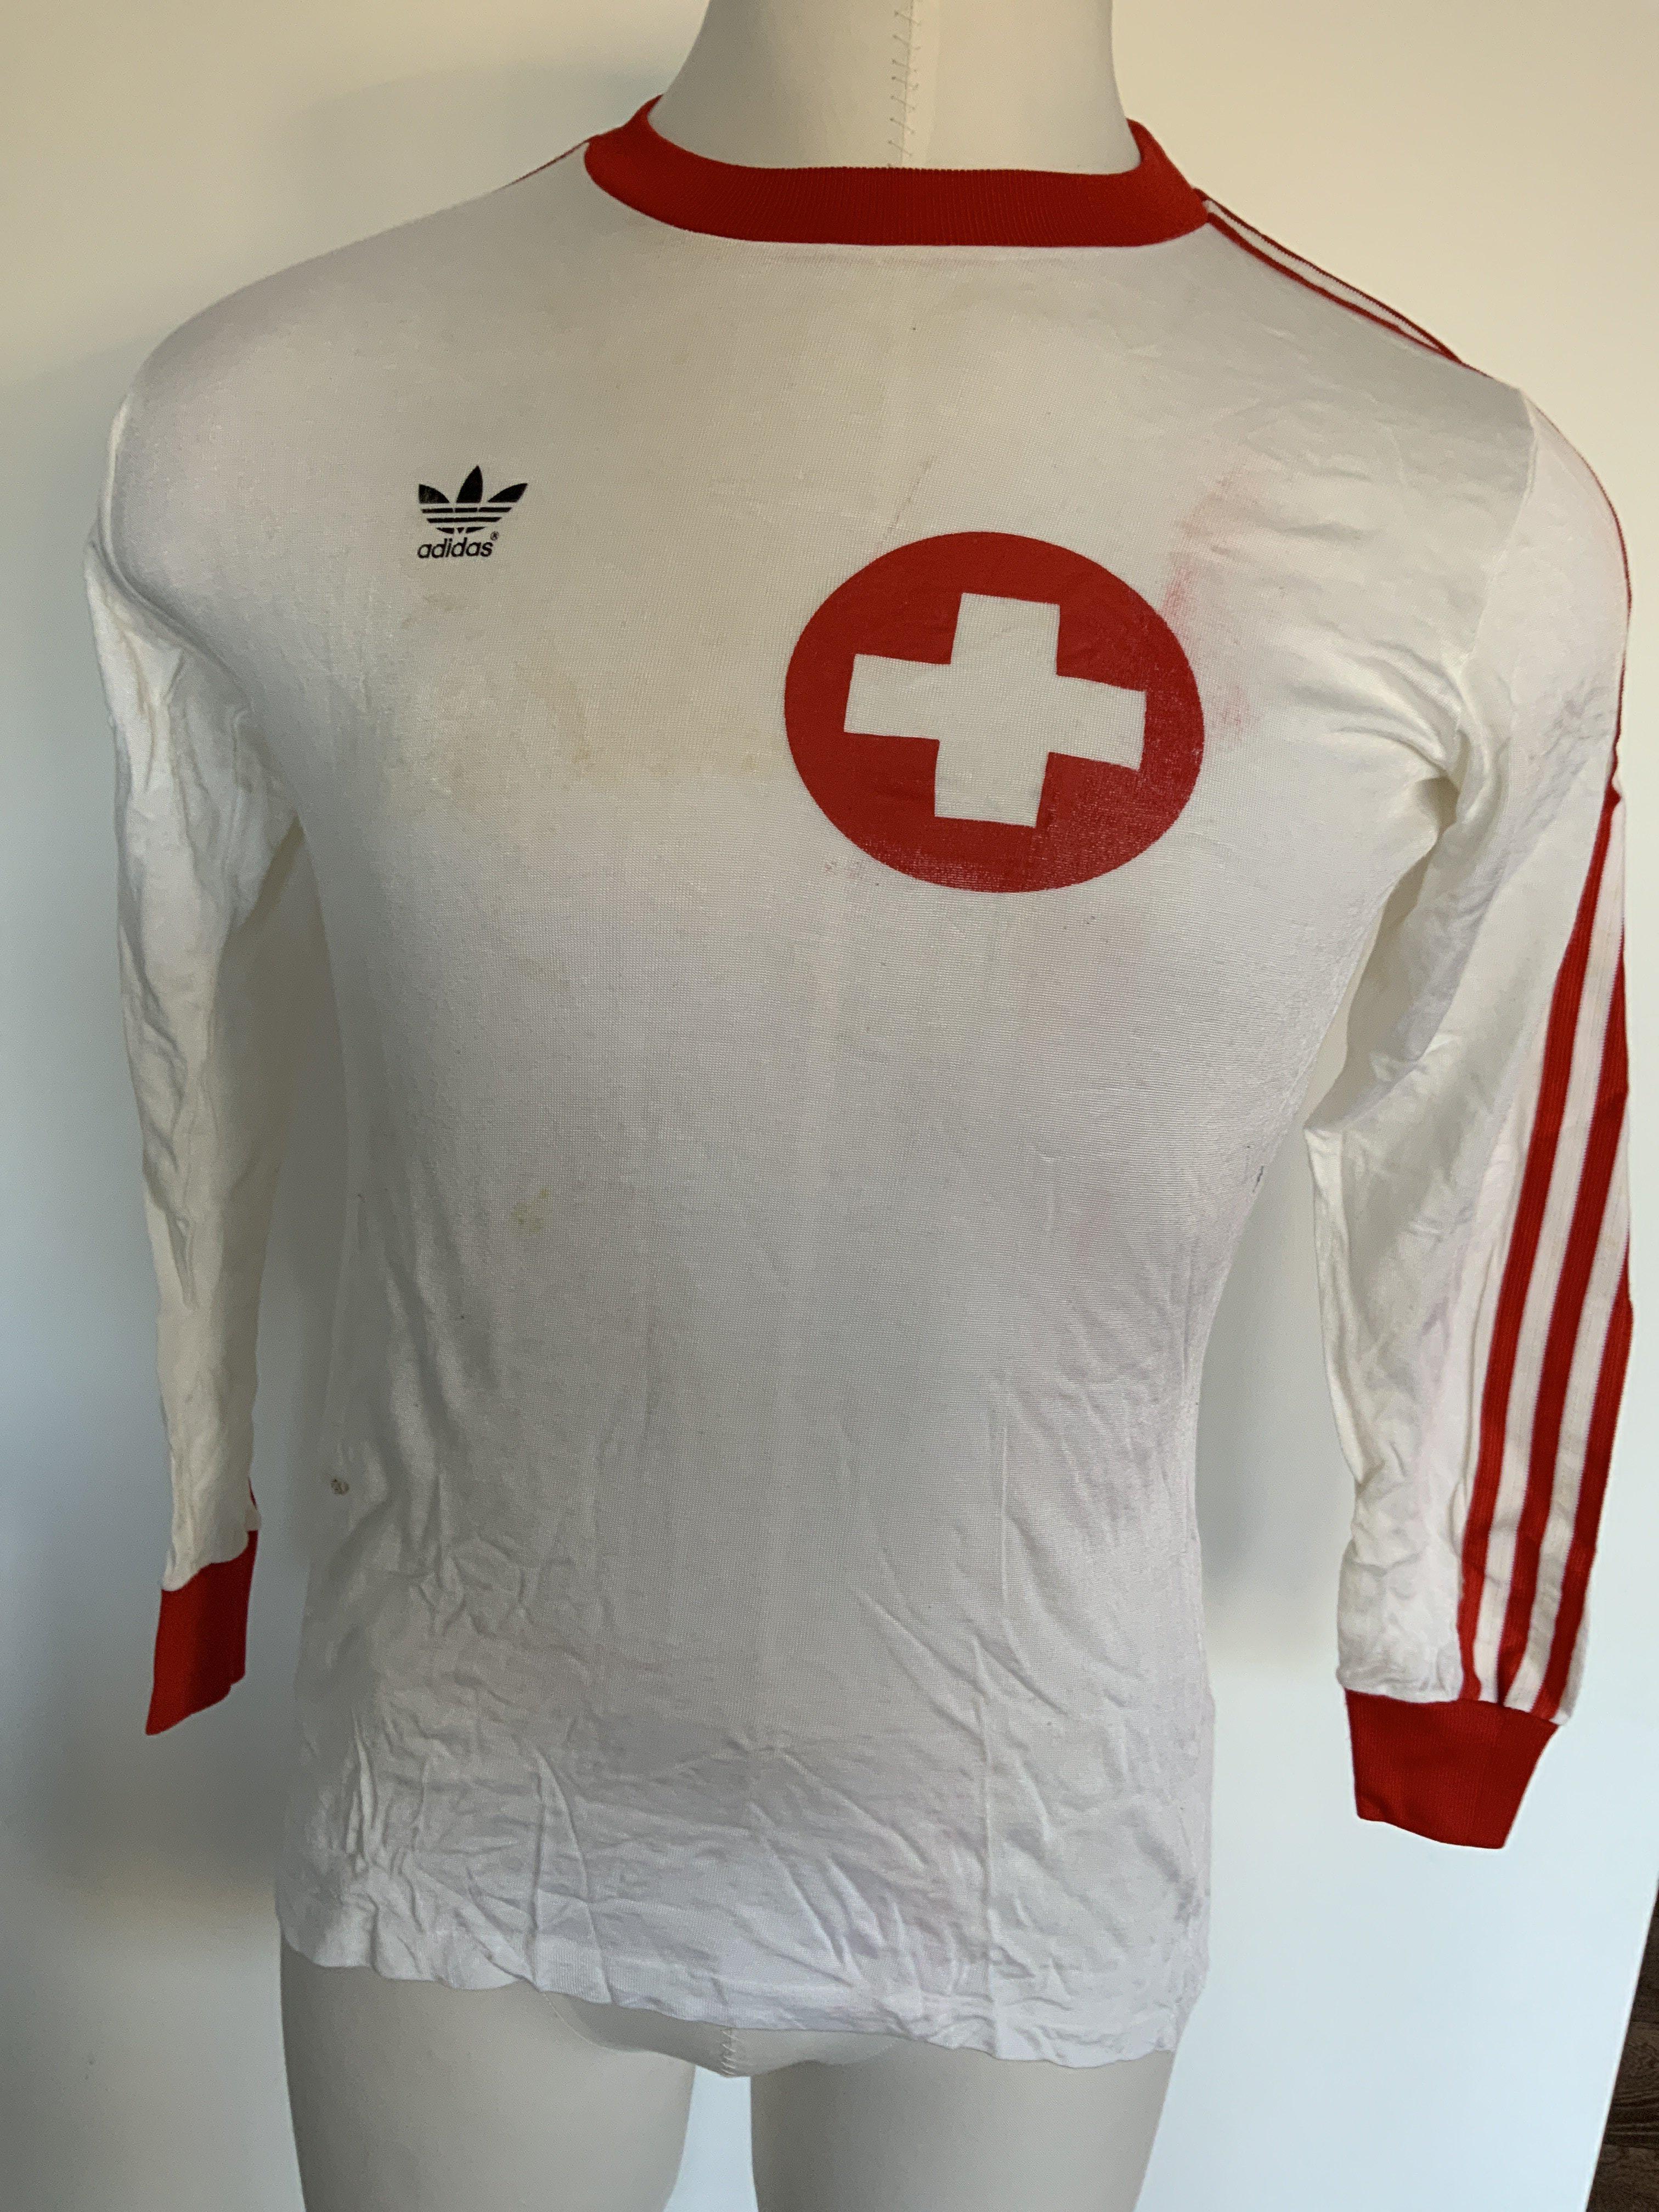 1975 Kurt Muller Switzerland Match Worn Football Shirt: White Adidas long sleeve shirt with red trim